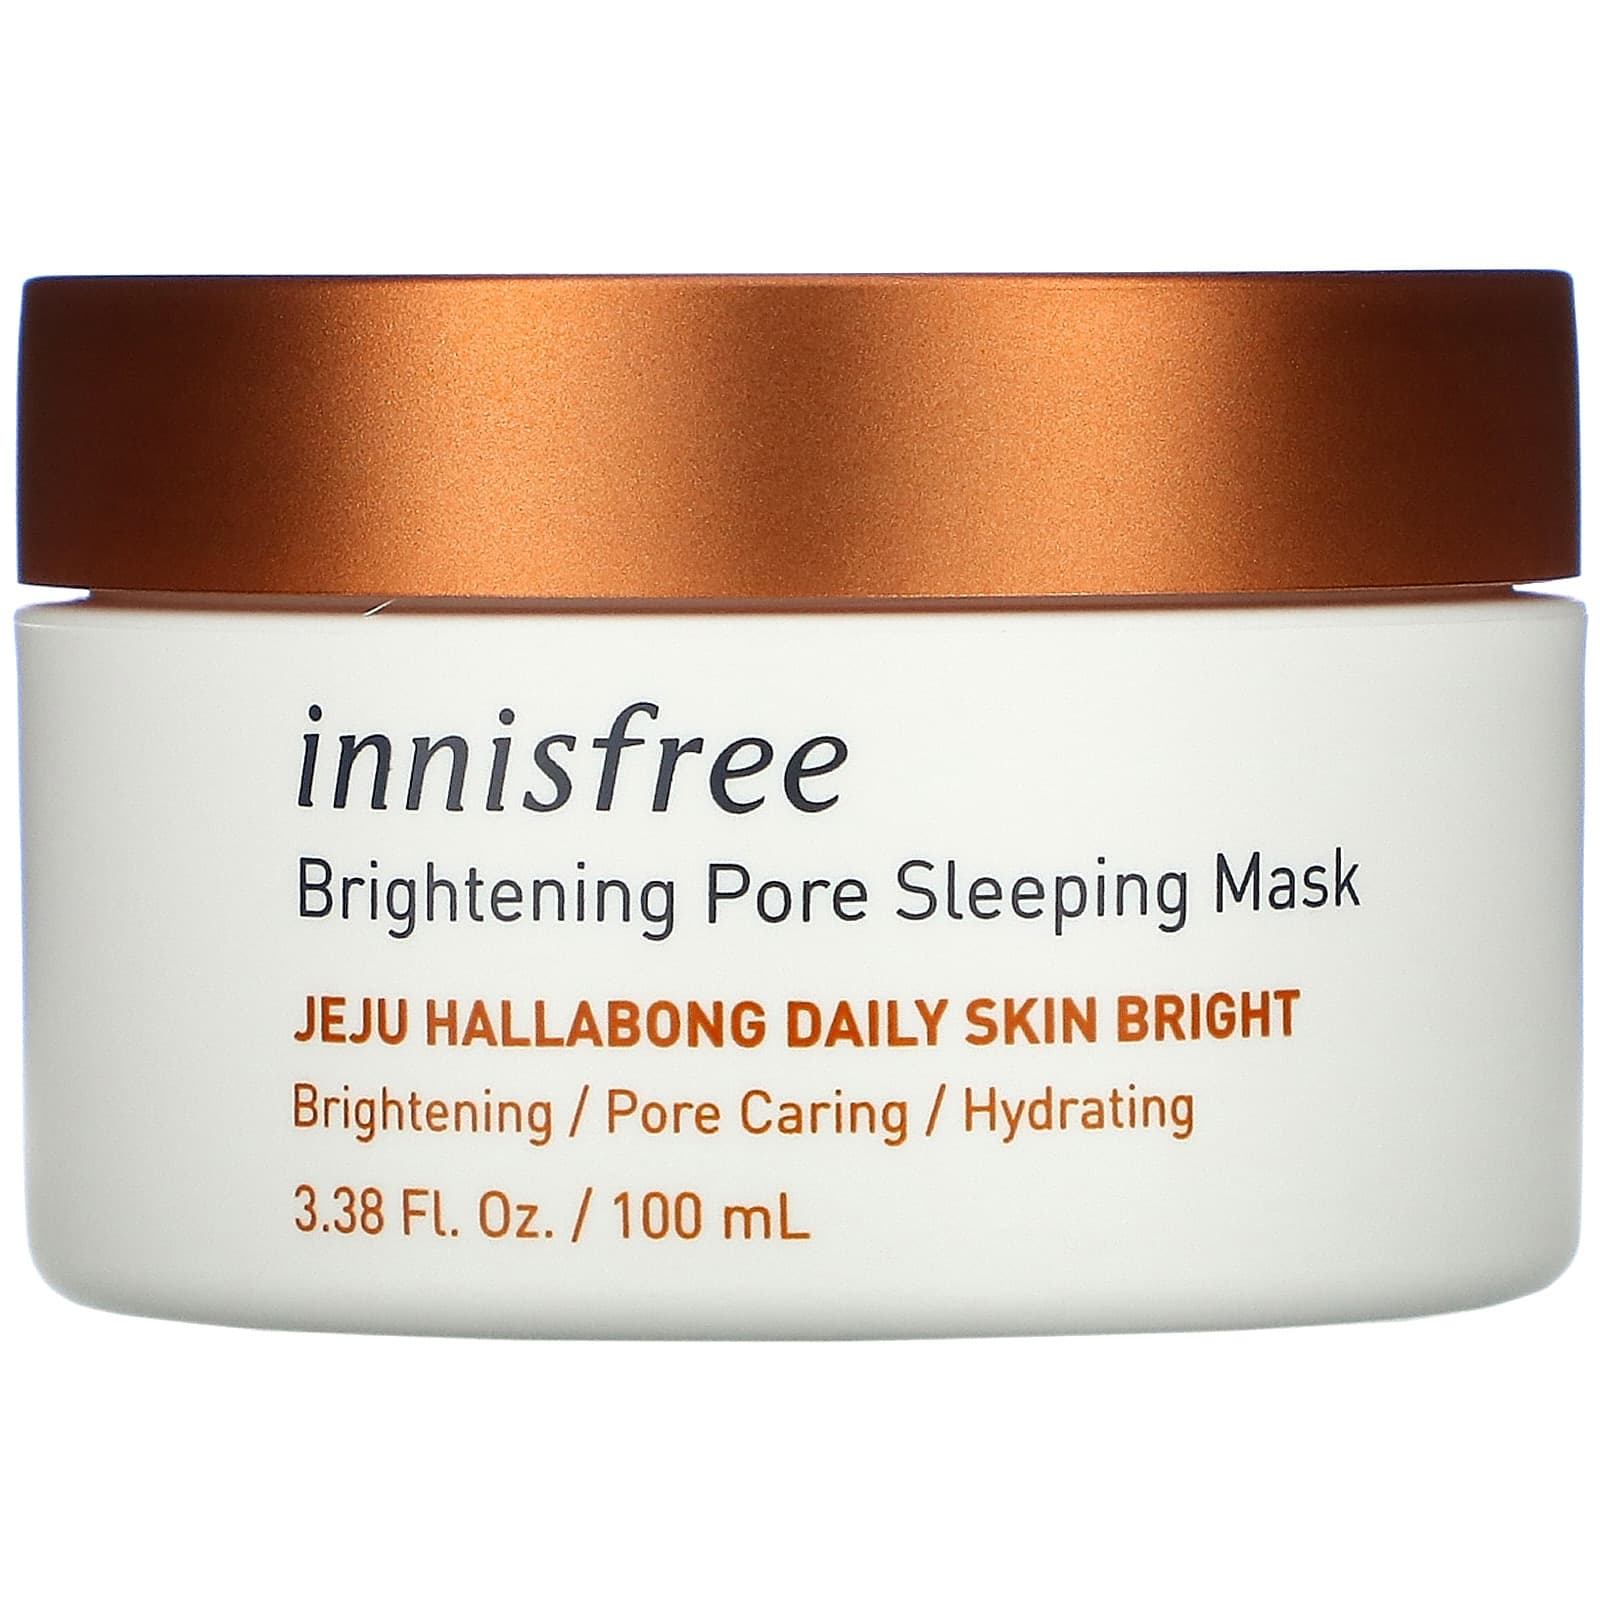 Innisfree, Jeju Hallabong Daily Skin Bright, Brightening Pore Sleeping Mask (100 ml)